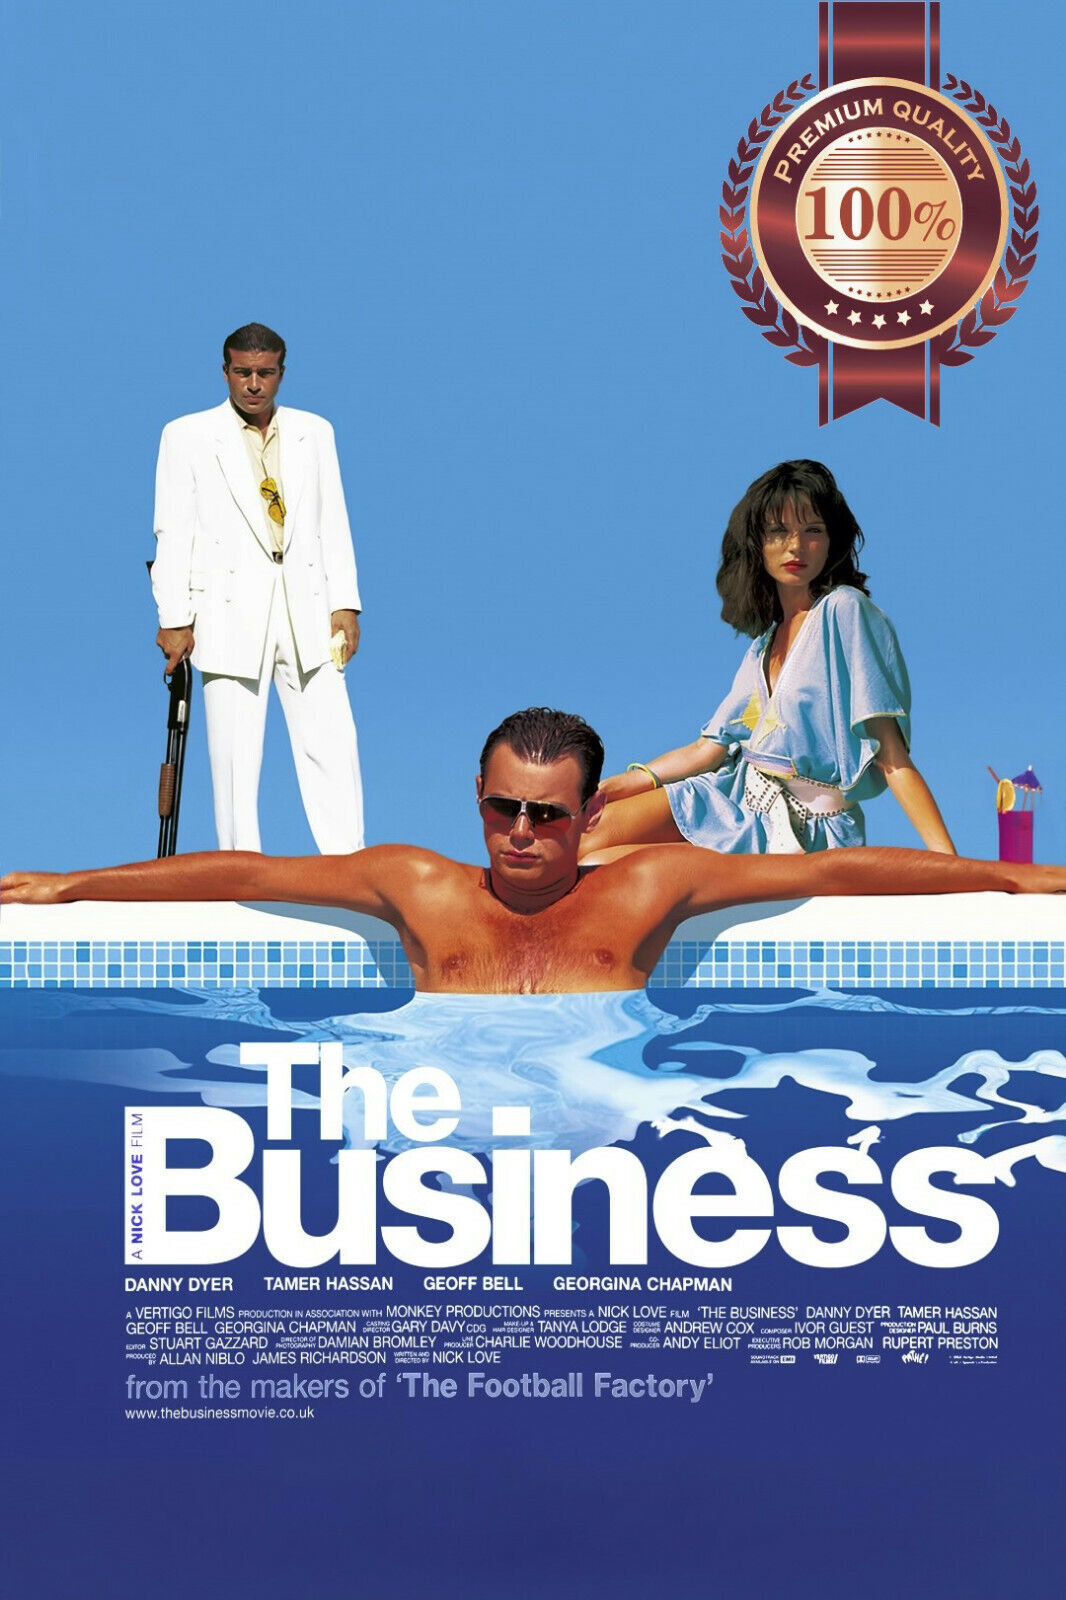 THE BUSINESS 2005 OFFICIAL ORIGINAL CINEMA MOVIE FILM PRINT PREMIUM POSTER